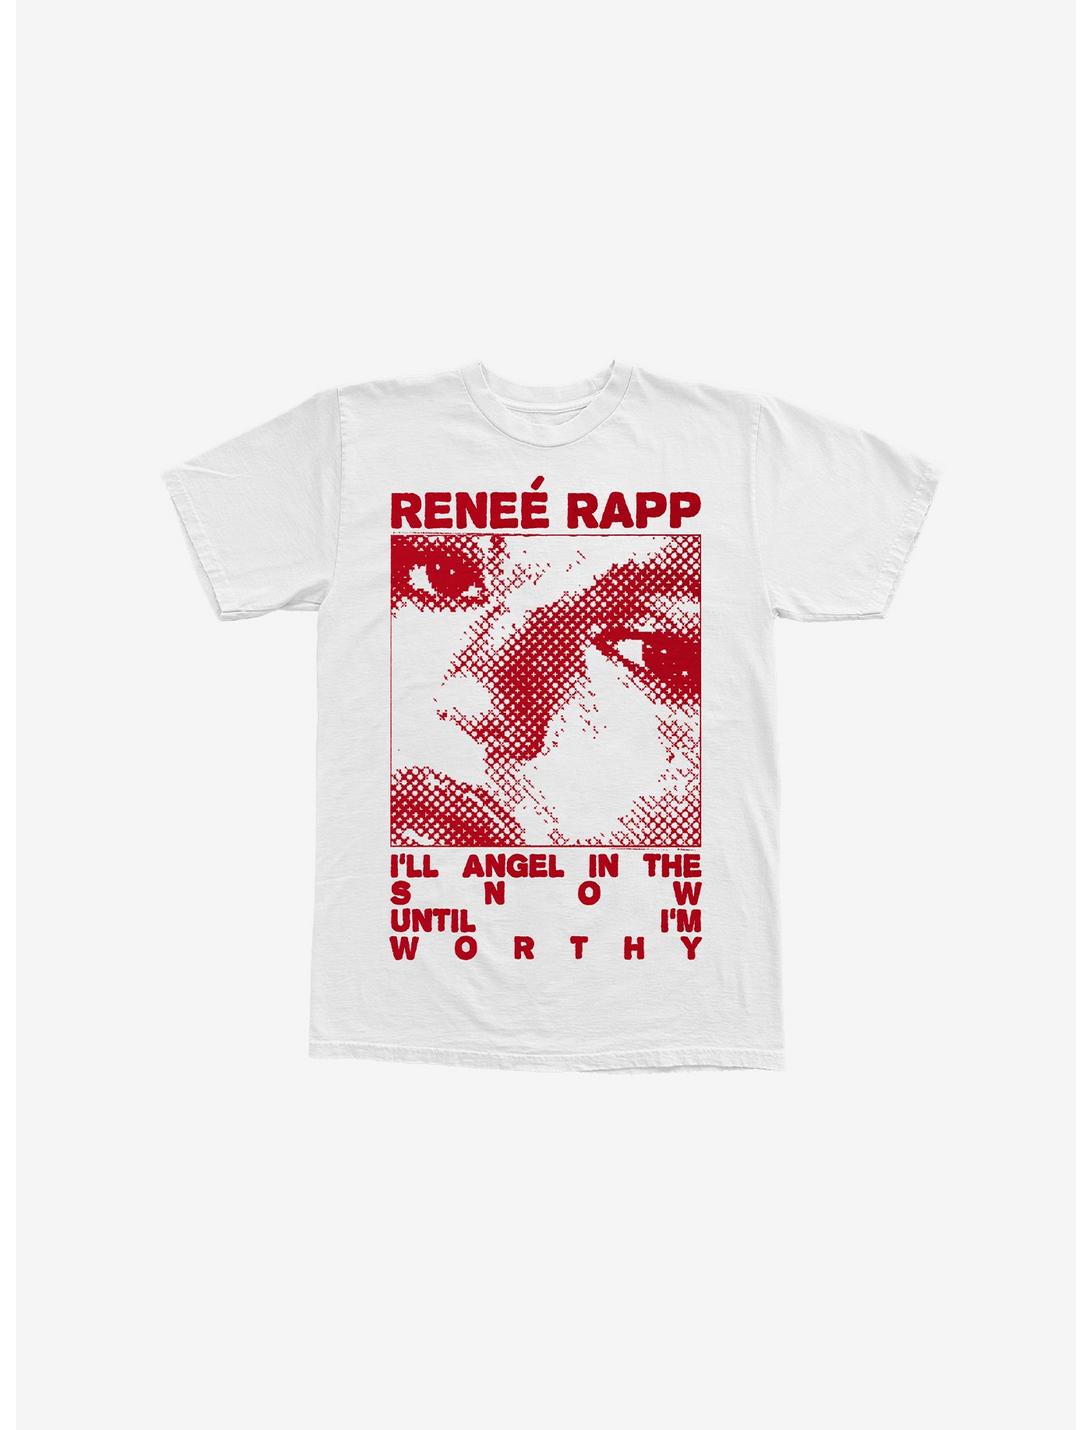 Renee Rapp Close-Up Portrait Boyfriend Fit Girls T-Shirt, BRIGHT WHITE, hi-res